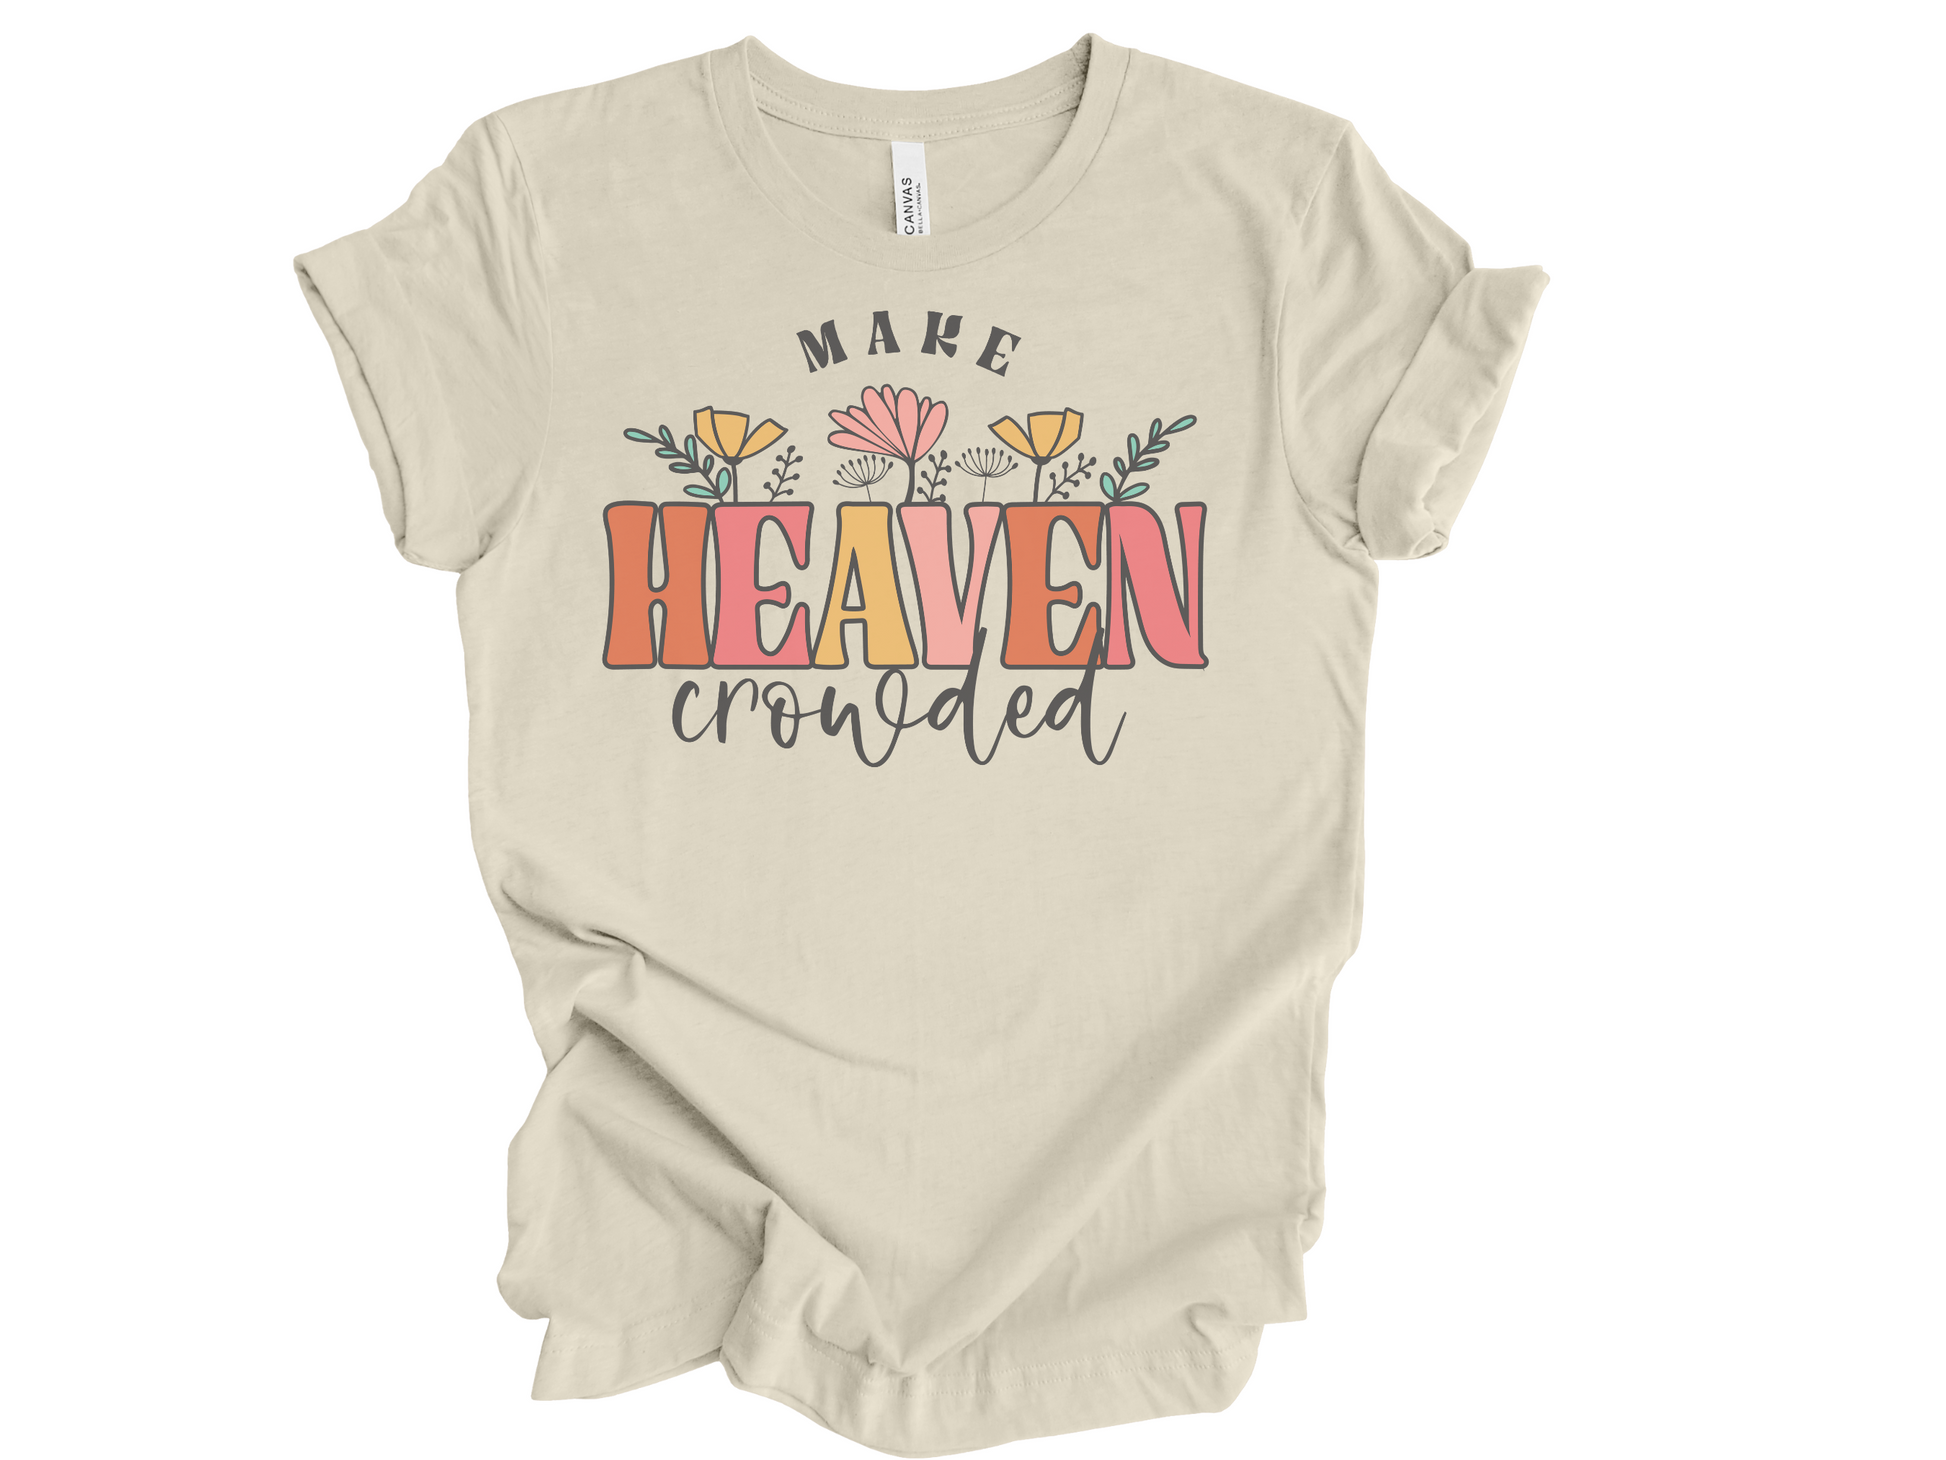 Make Heaven Crowded Christian t-shirt in Bella Canvas soft cream.